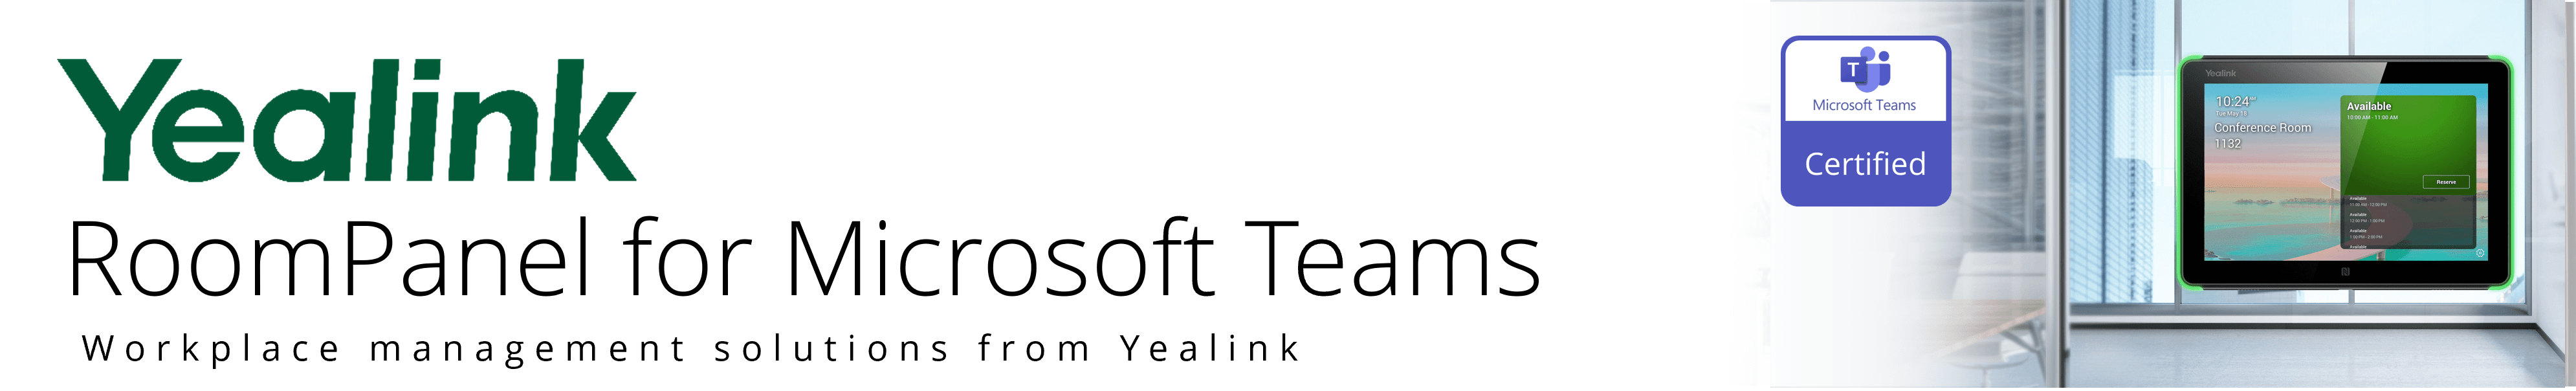 Yealink RoomPanel Certitifed for Microsoft Teams